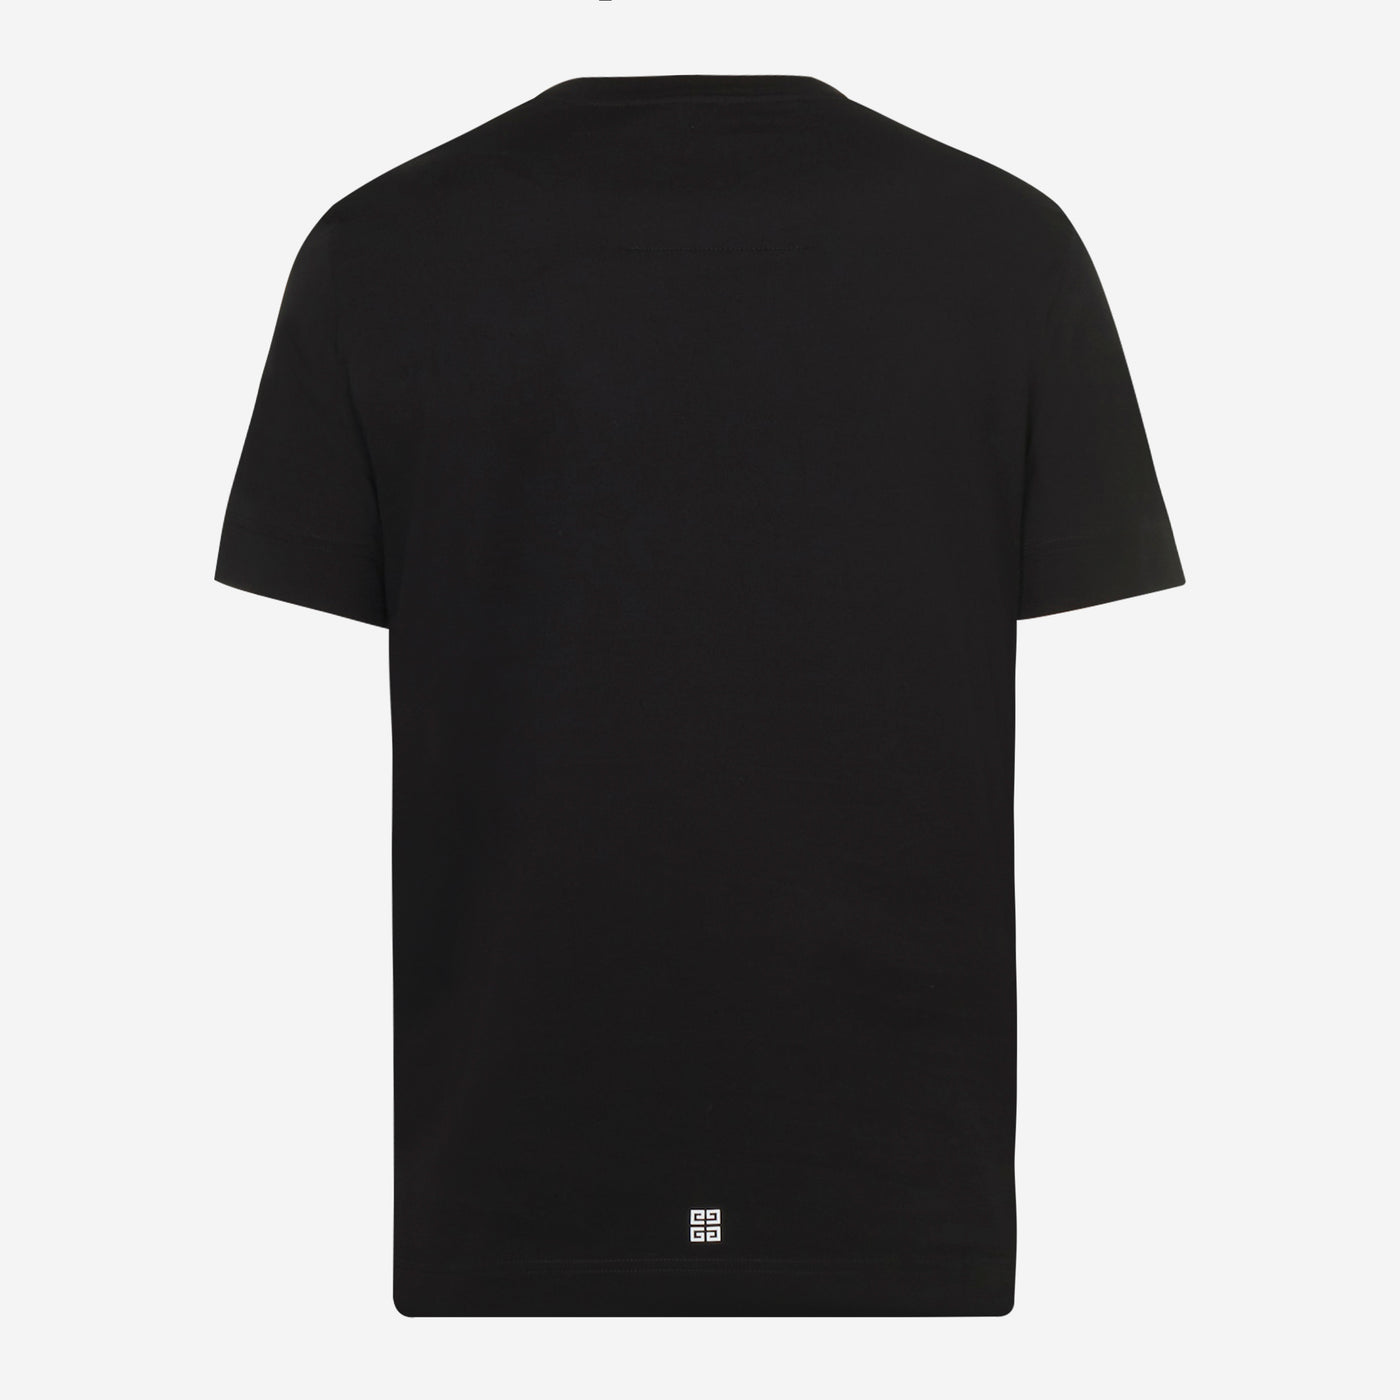 Givenchy 4G Stars T-Shirt